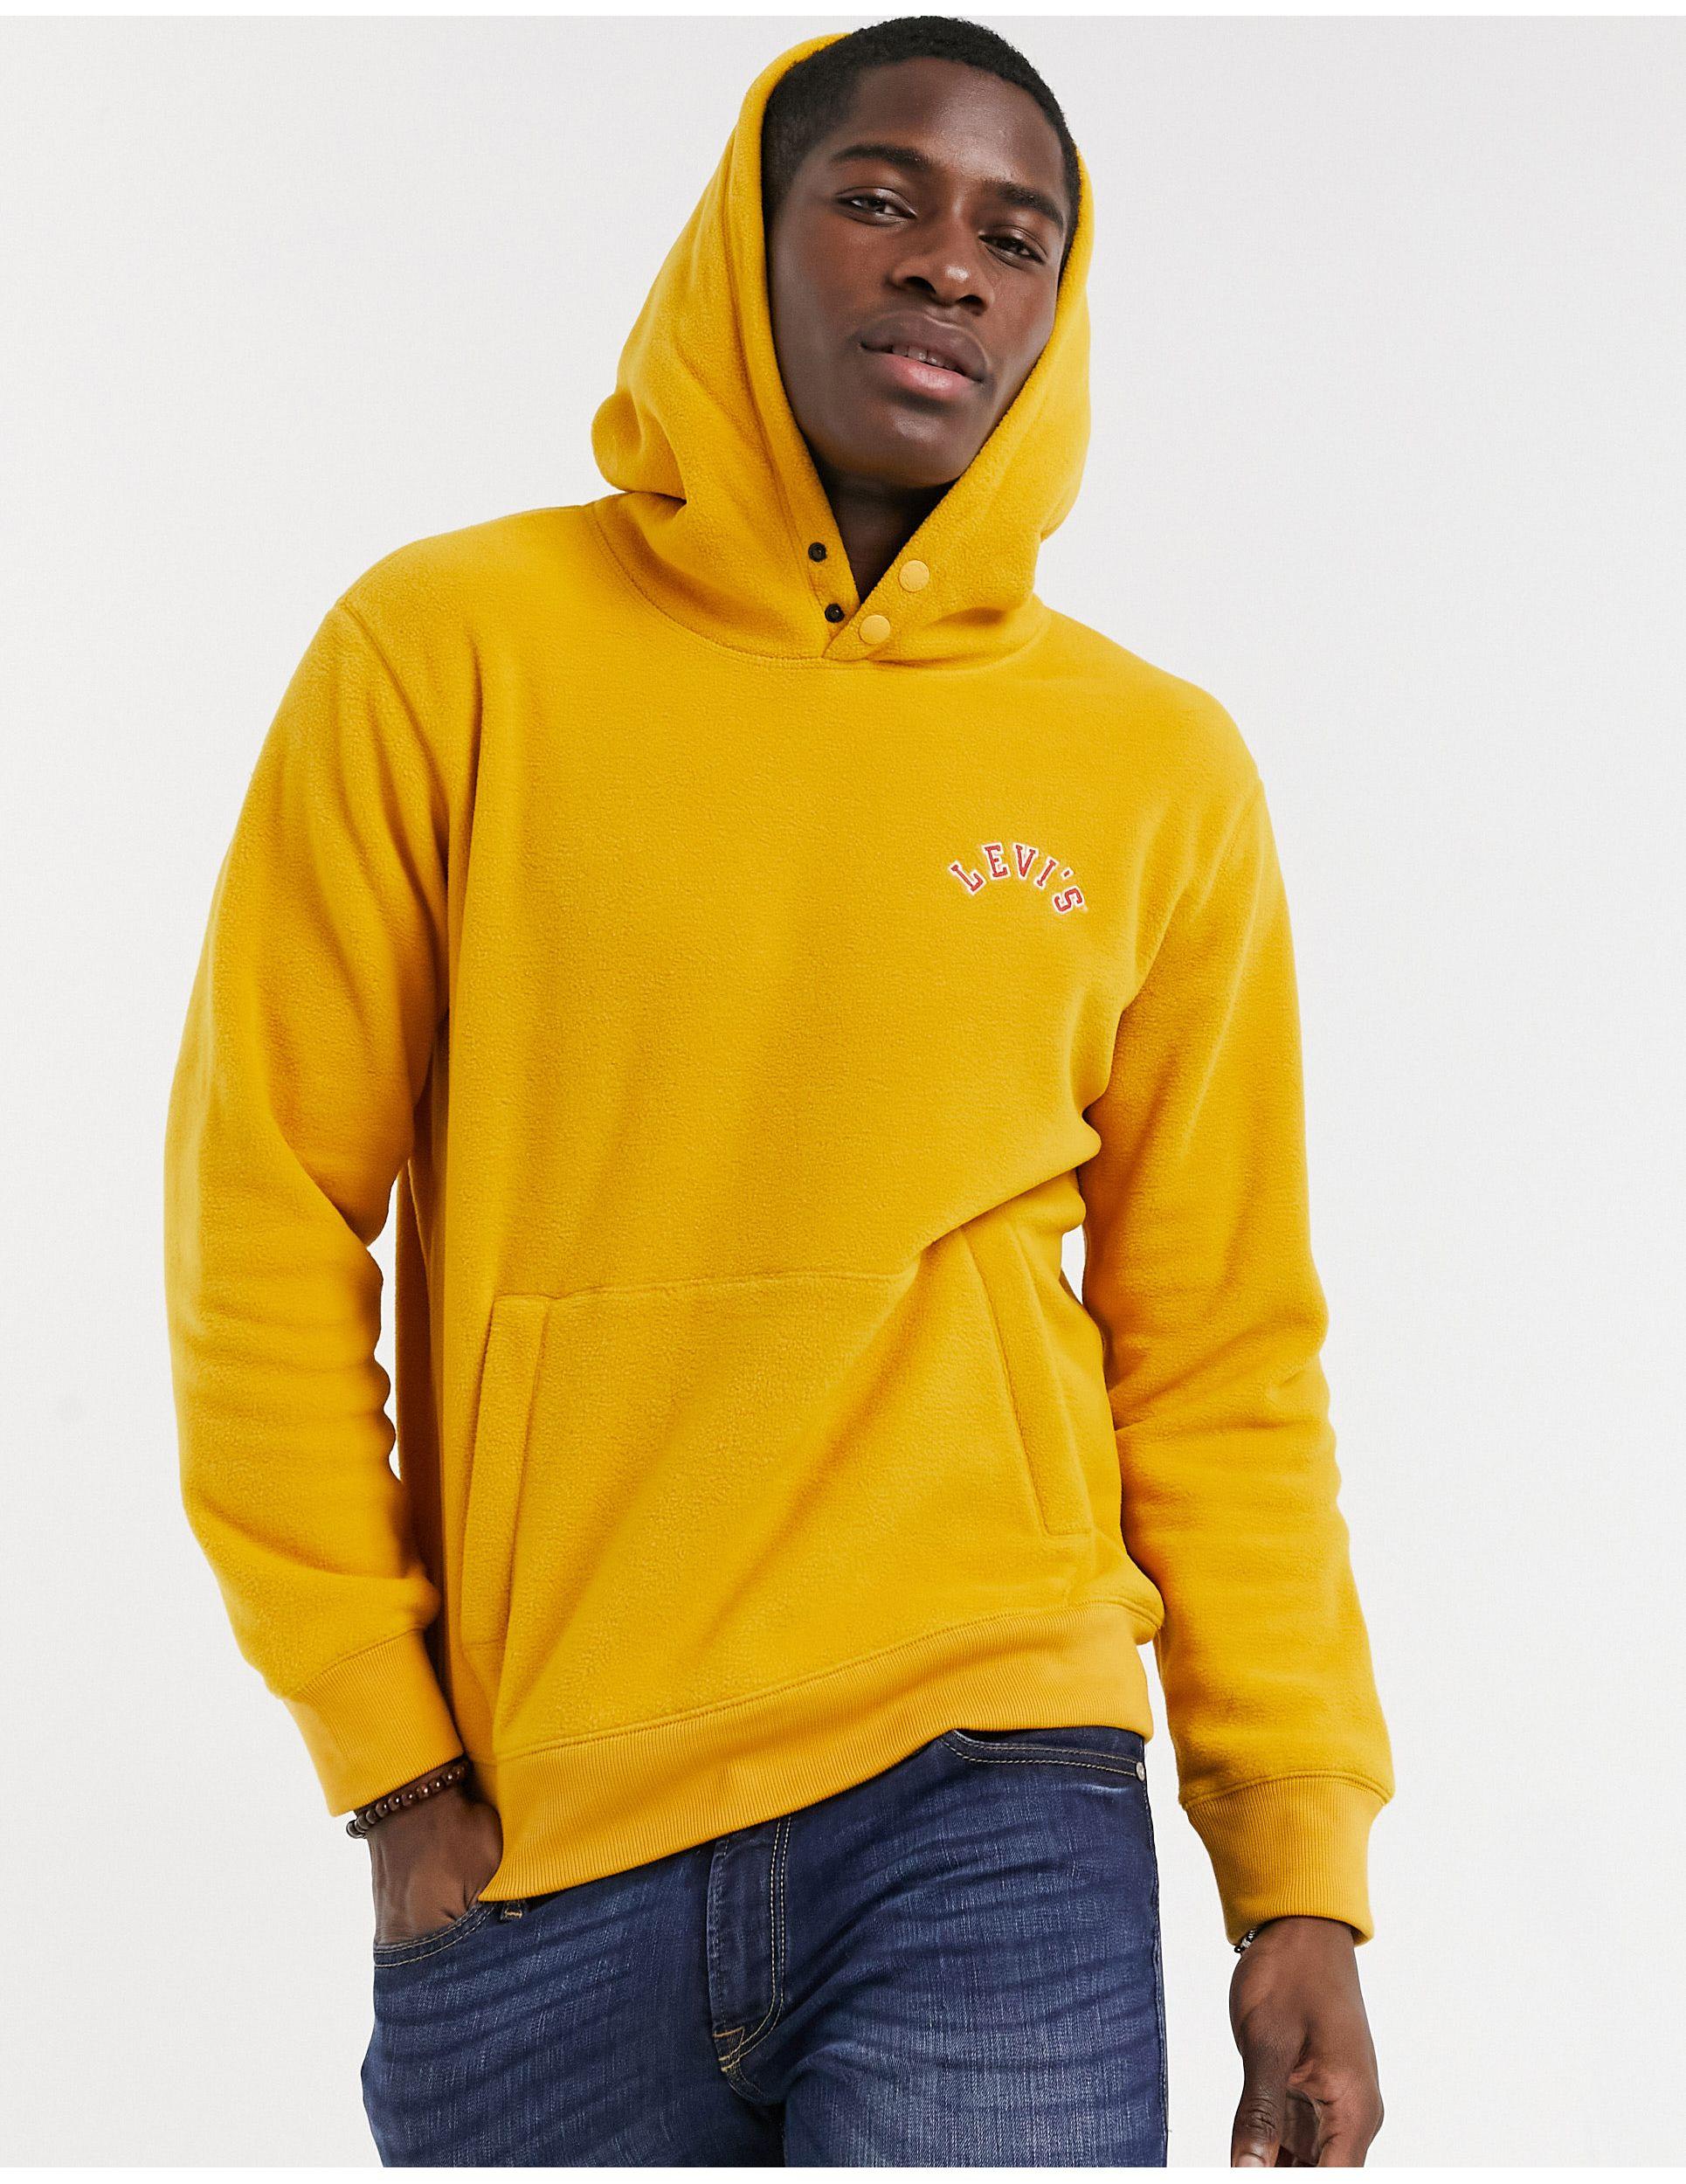 Levi's Logo Polar Fleece Hoodie in Yellow for Men - Lyst